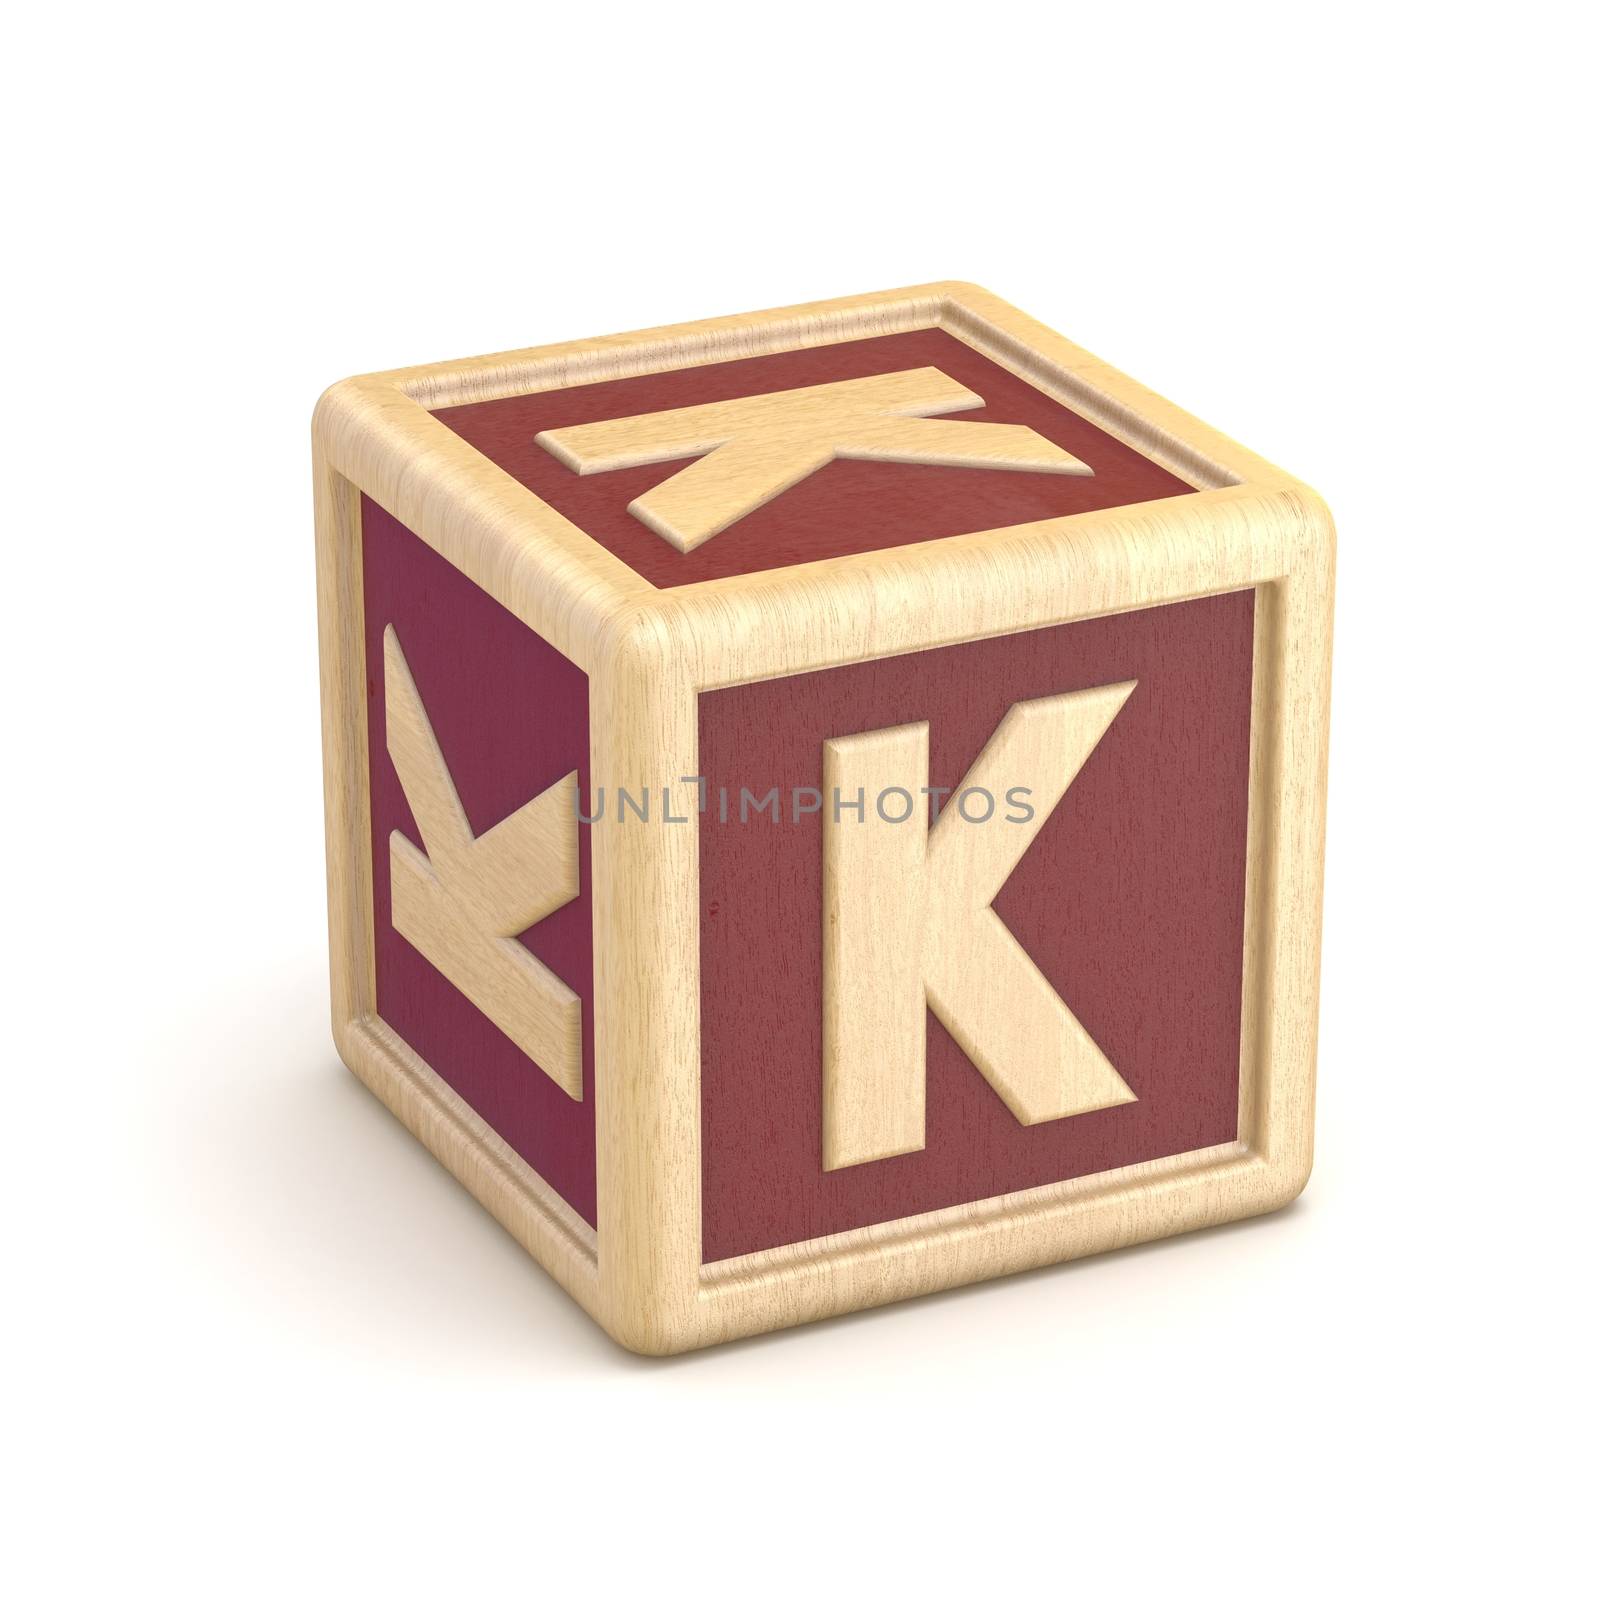 Letter K wooden alphabet blocks font rotated. 3D render illustration isolated on white background